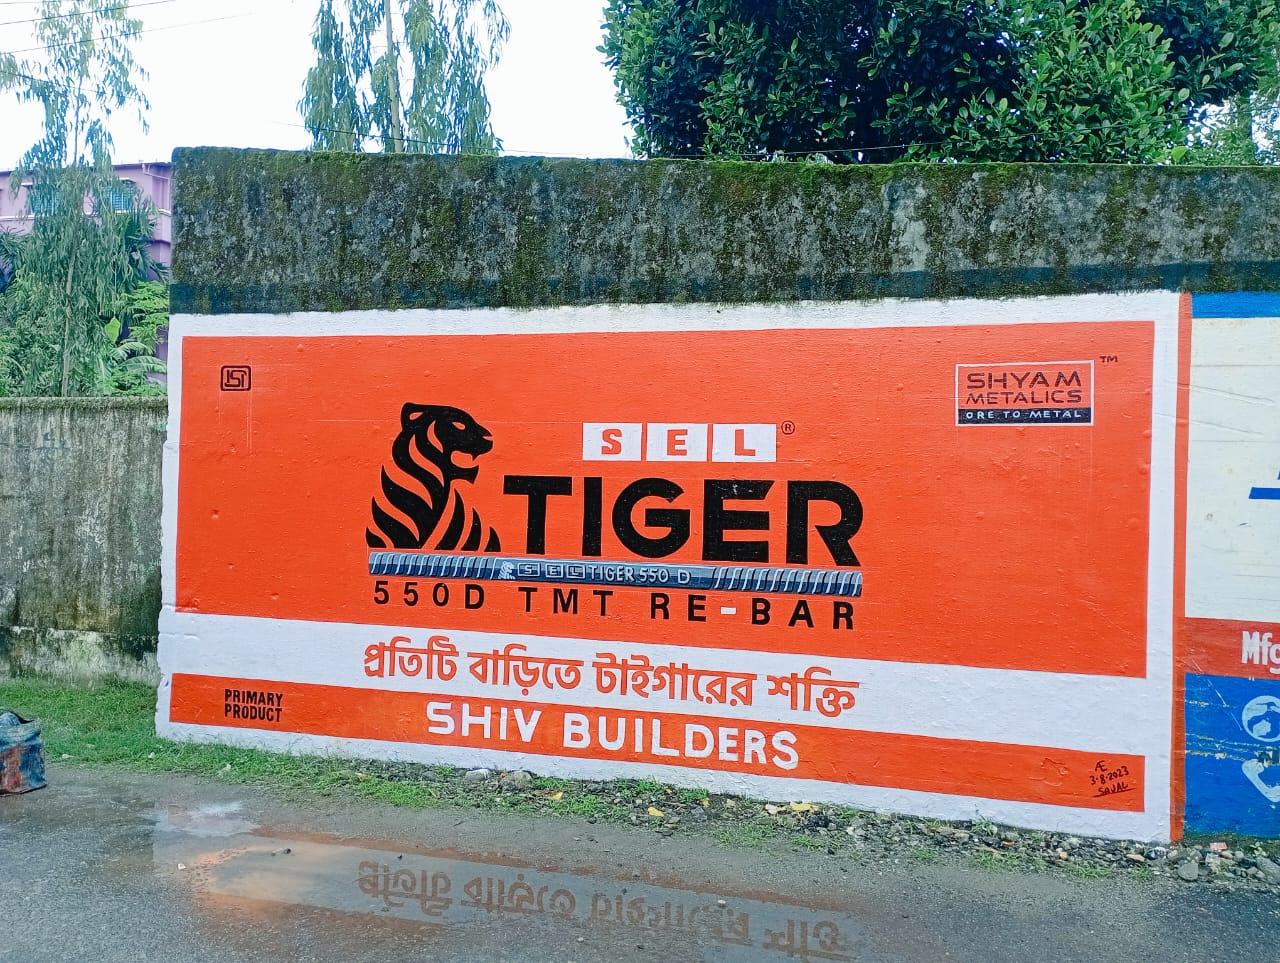 SEL Tiger TMT wall branding